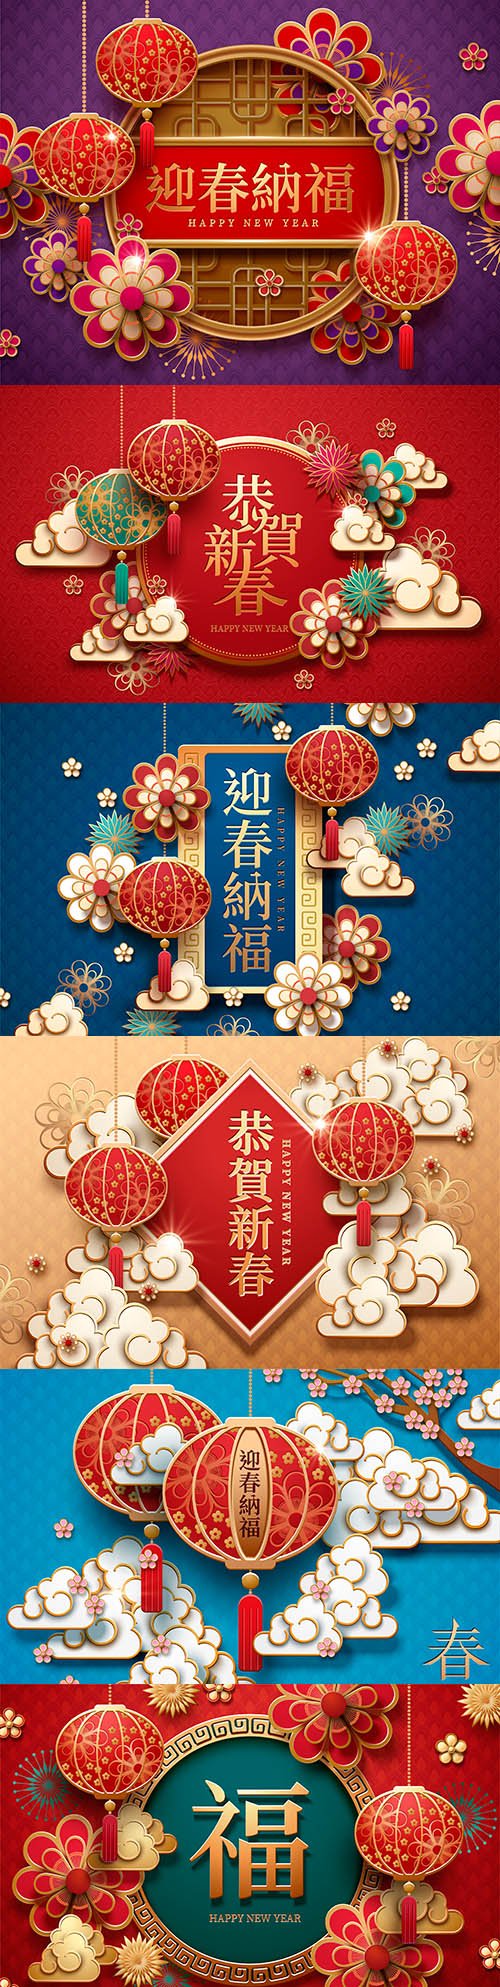 Happy New Year words written in hanzi on spring verse